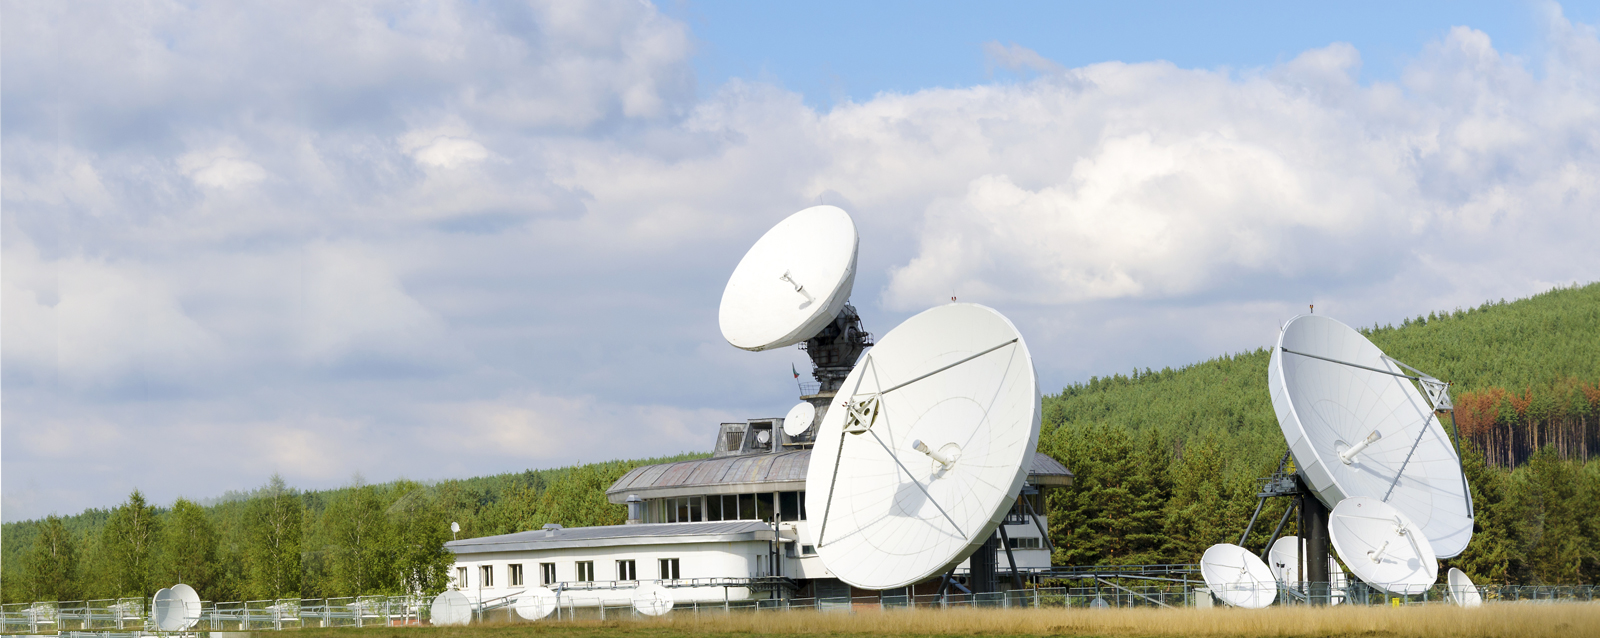 American telecommunications large satellite earth station antennas 